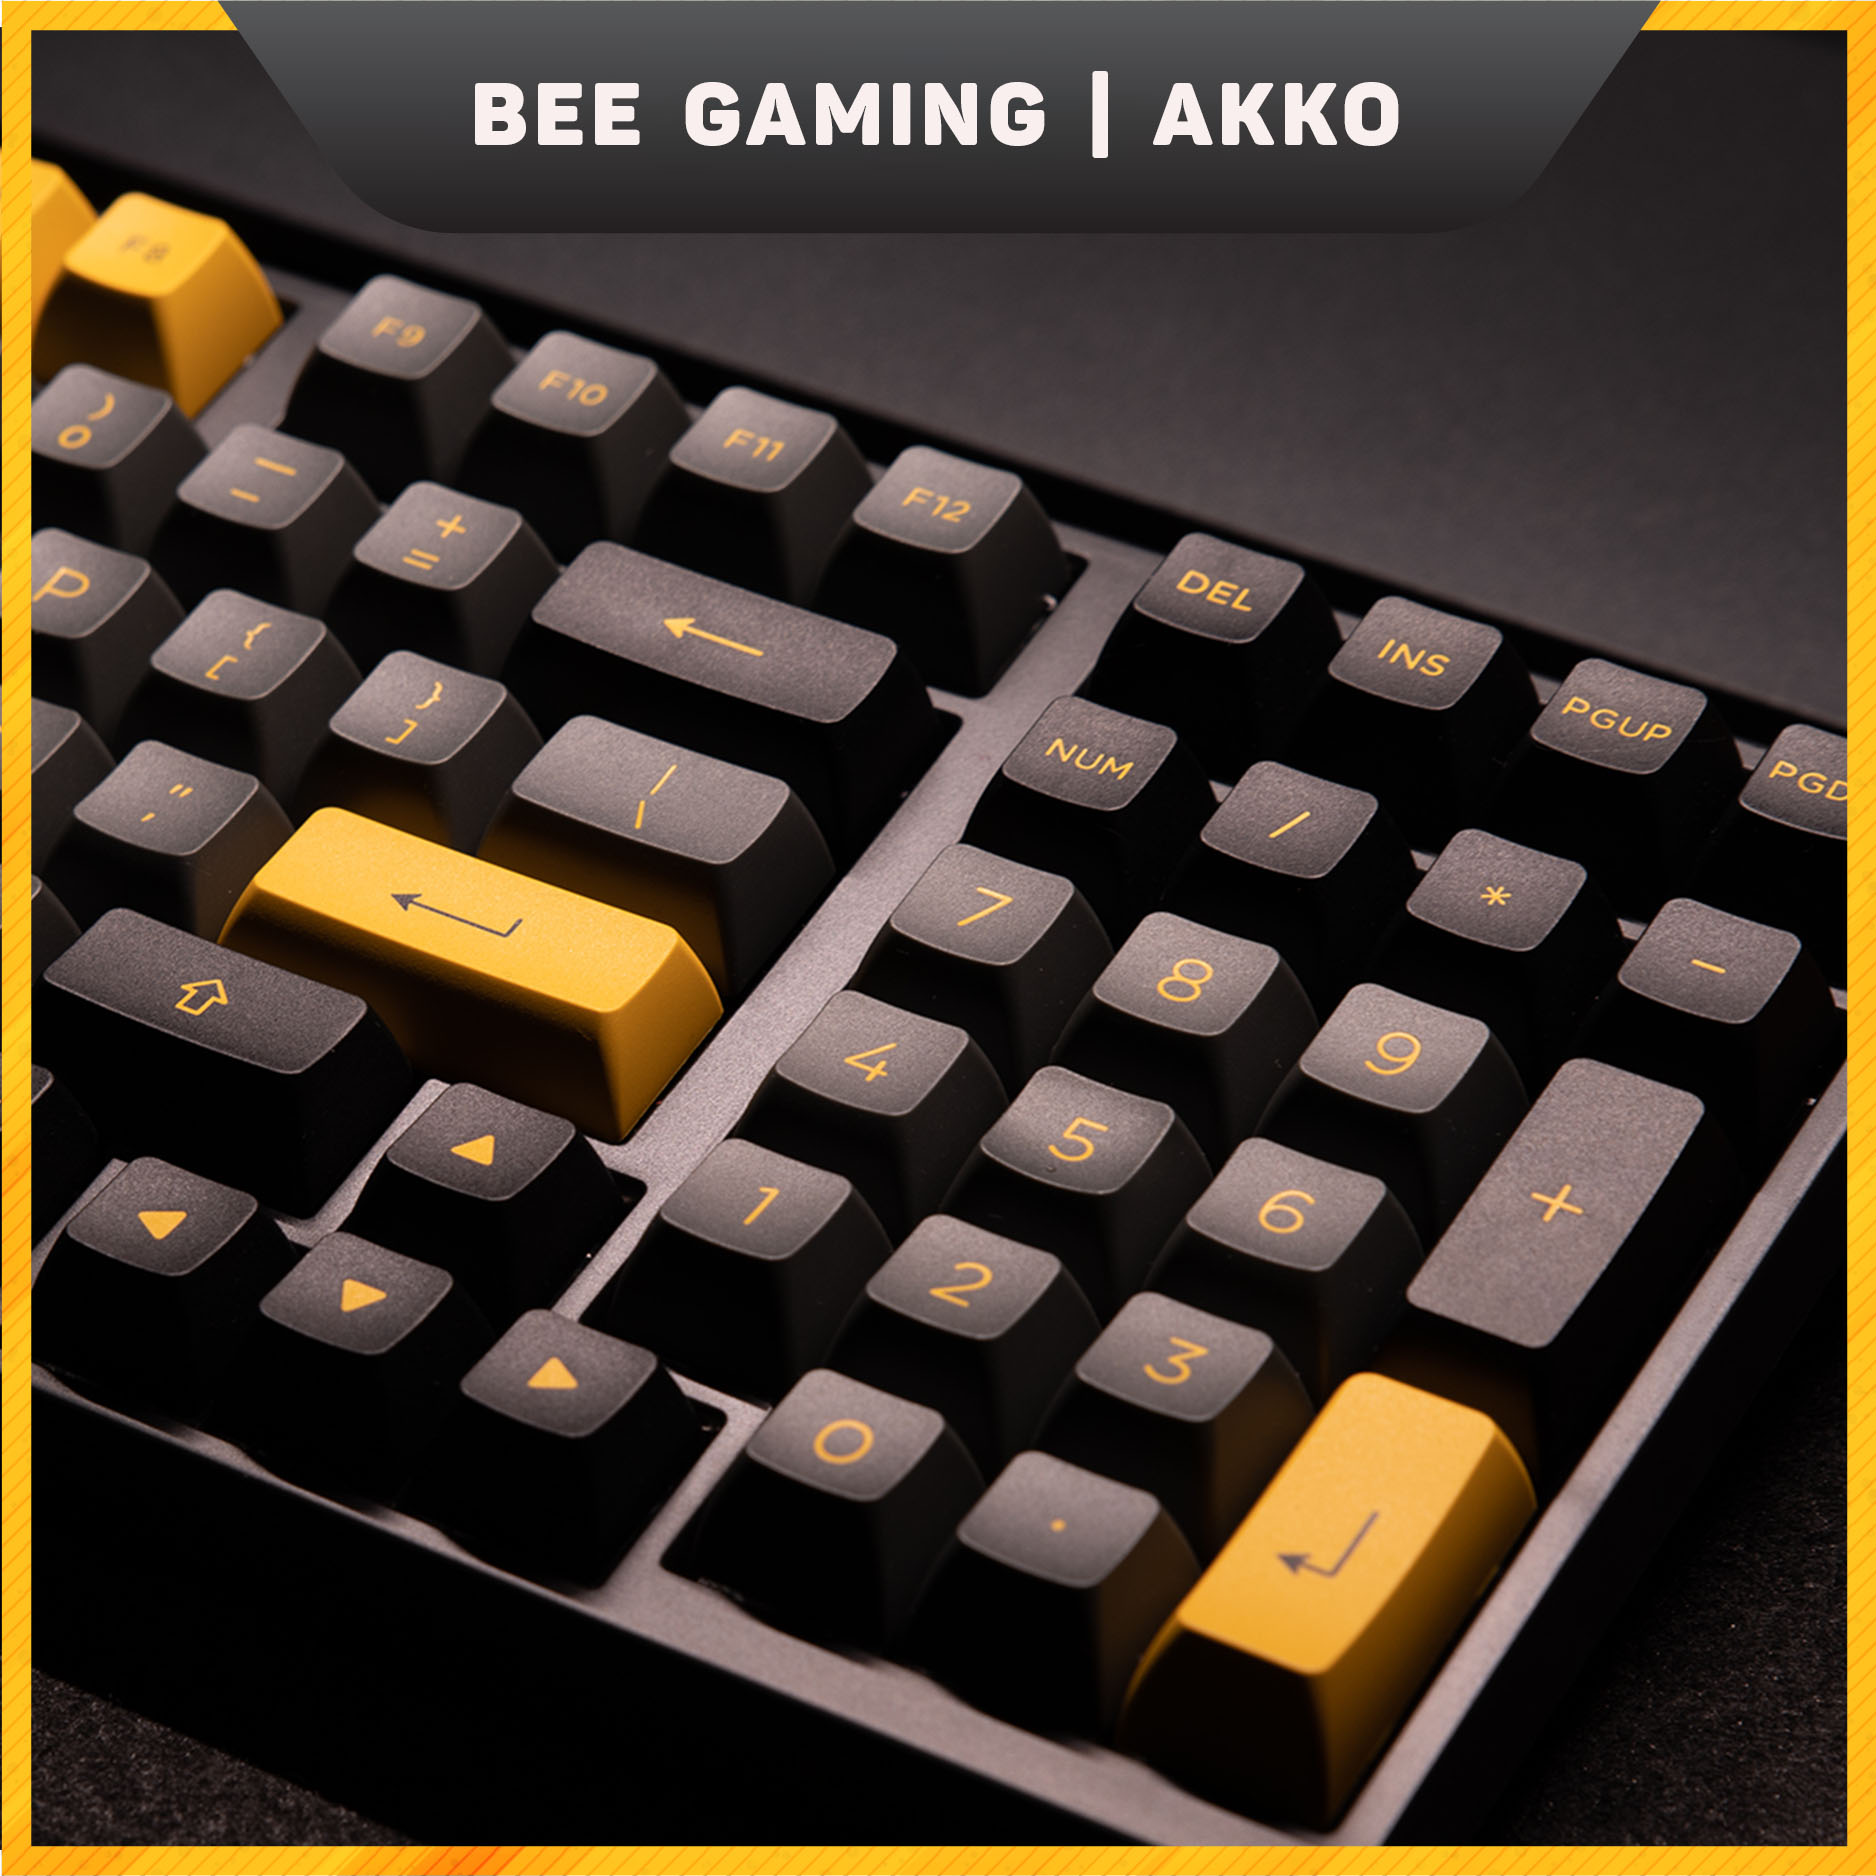 ban-phim-co-akko-3098b-black-gold-beegaming-10